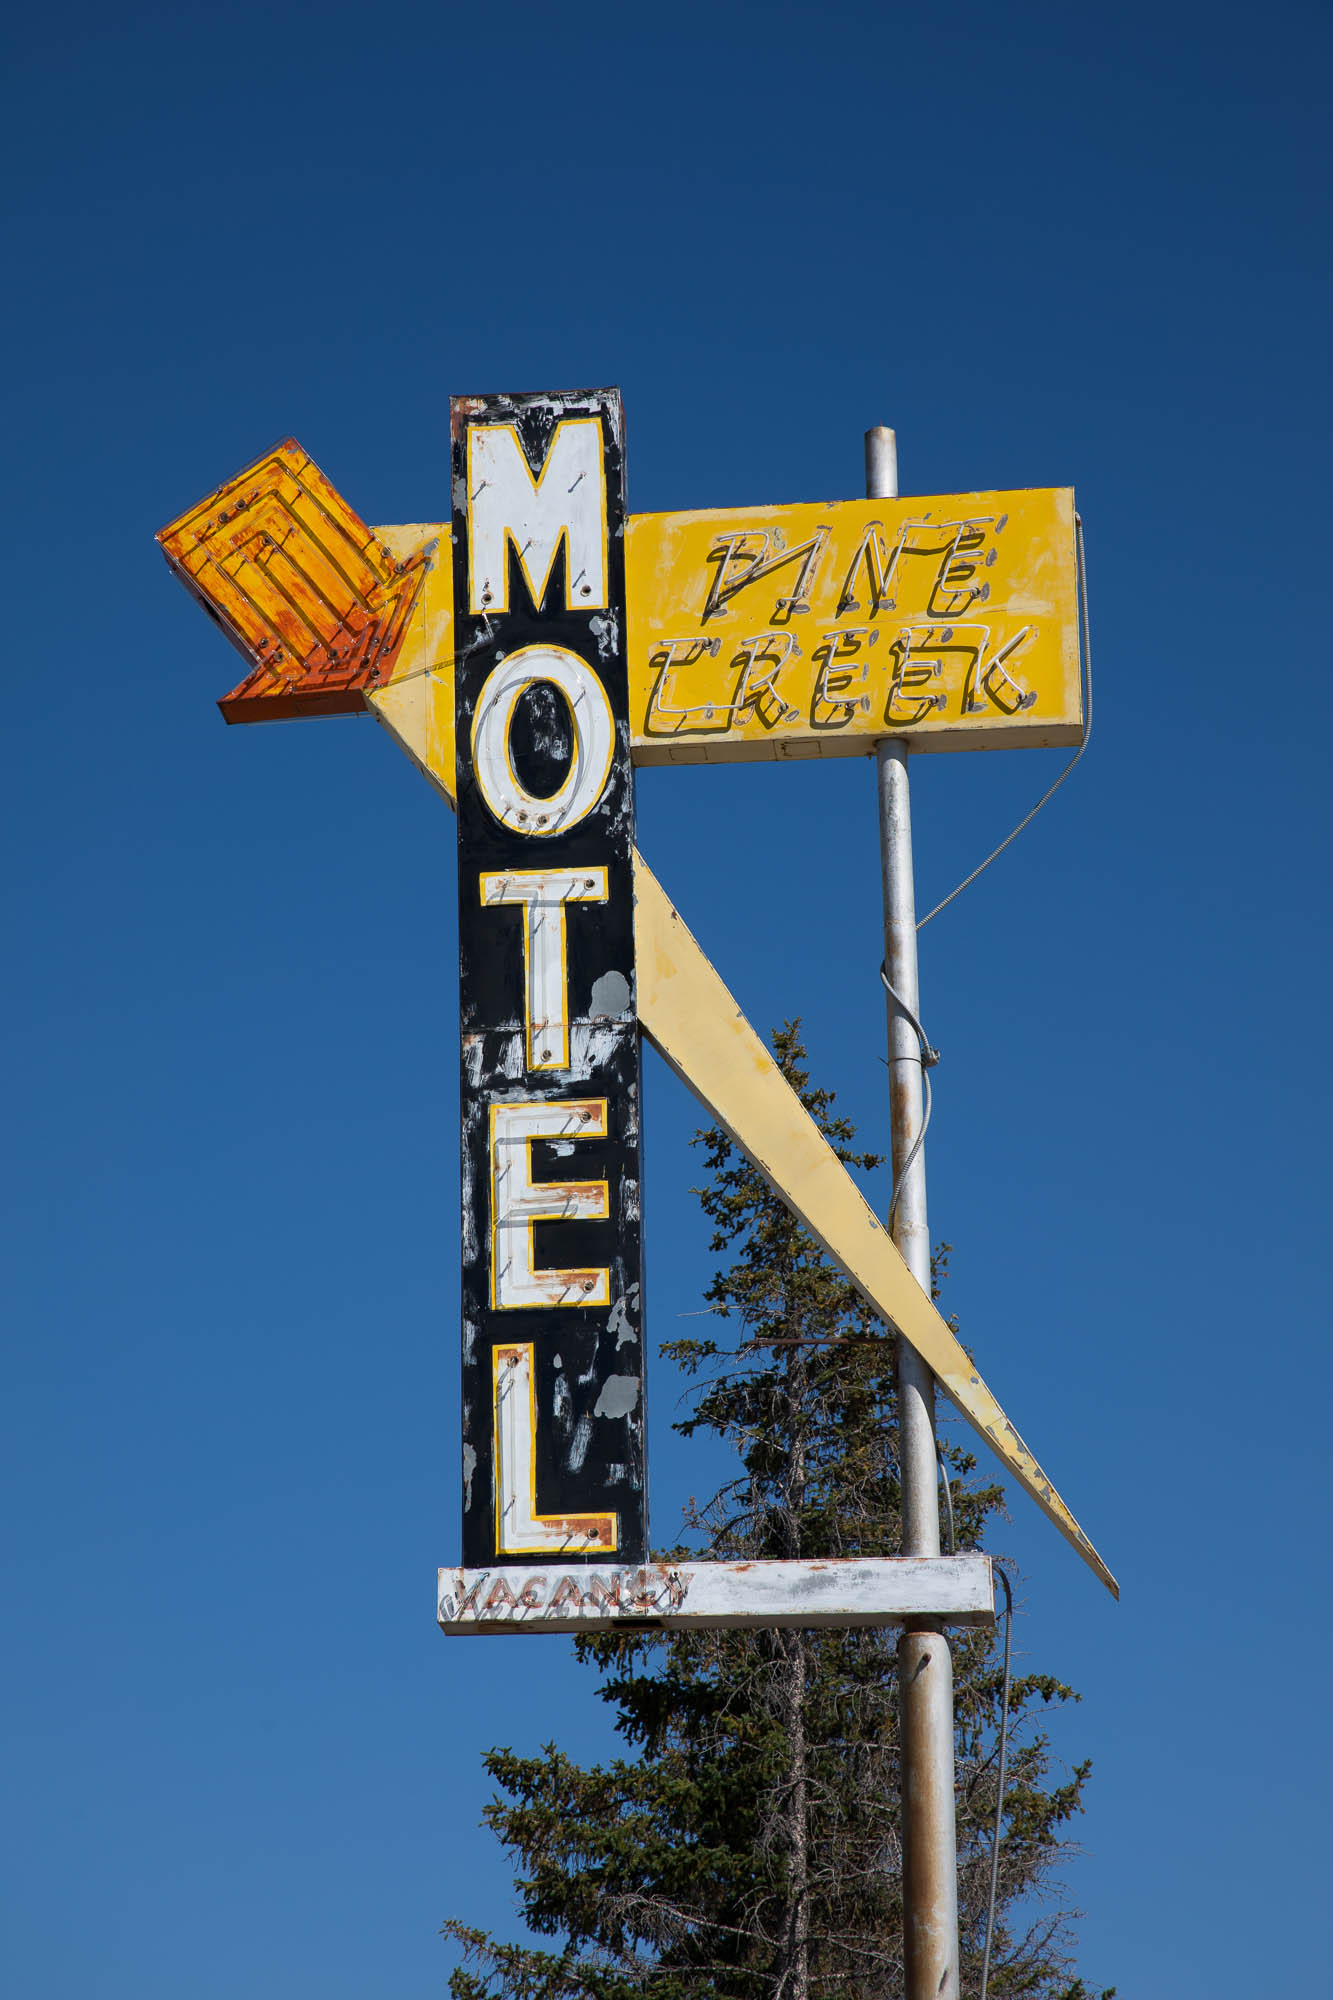 Pine Creek Motel - Pinedale, Wyoming U.S.A. - August 29, 2018